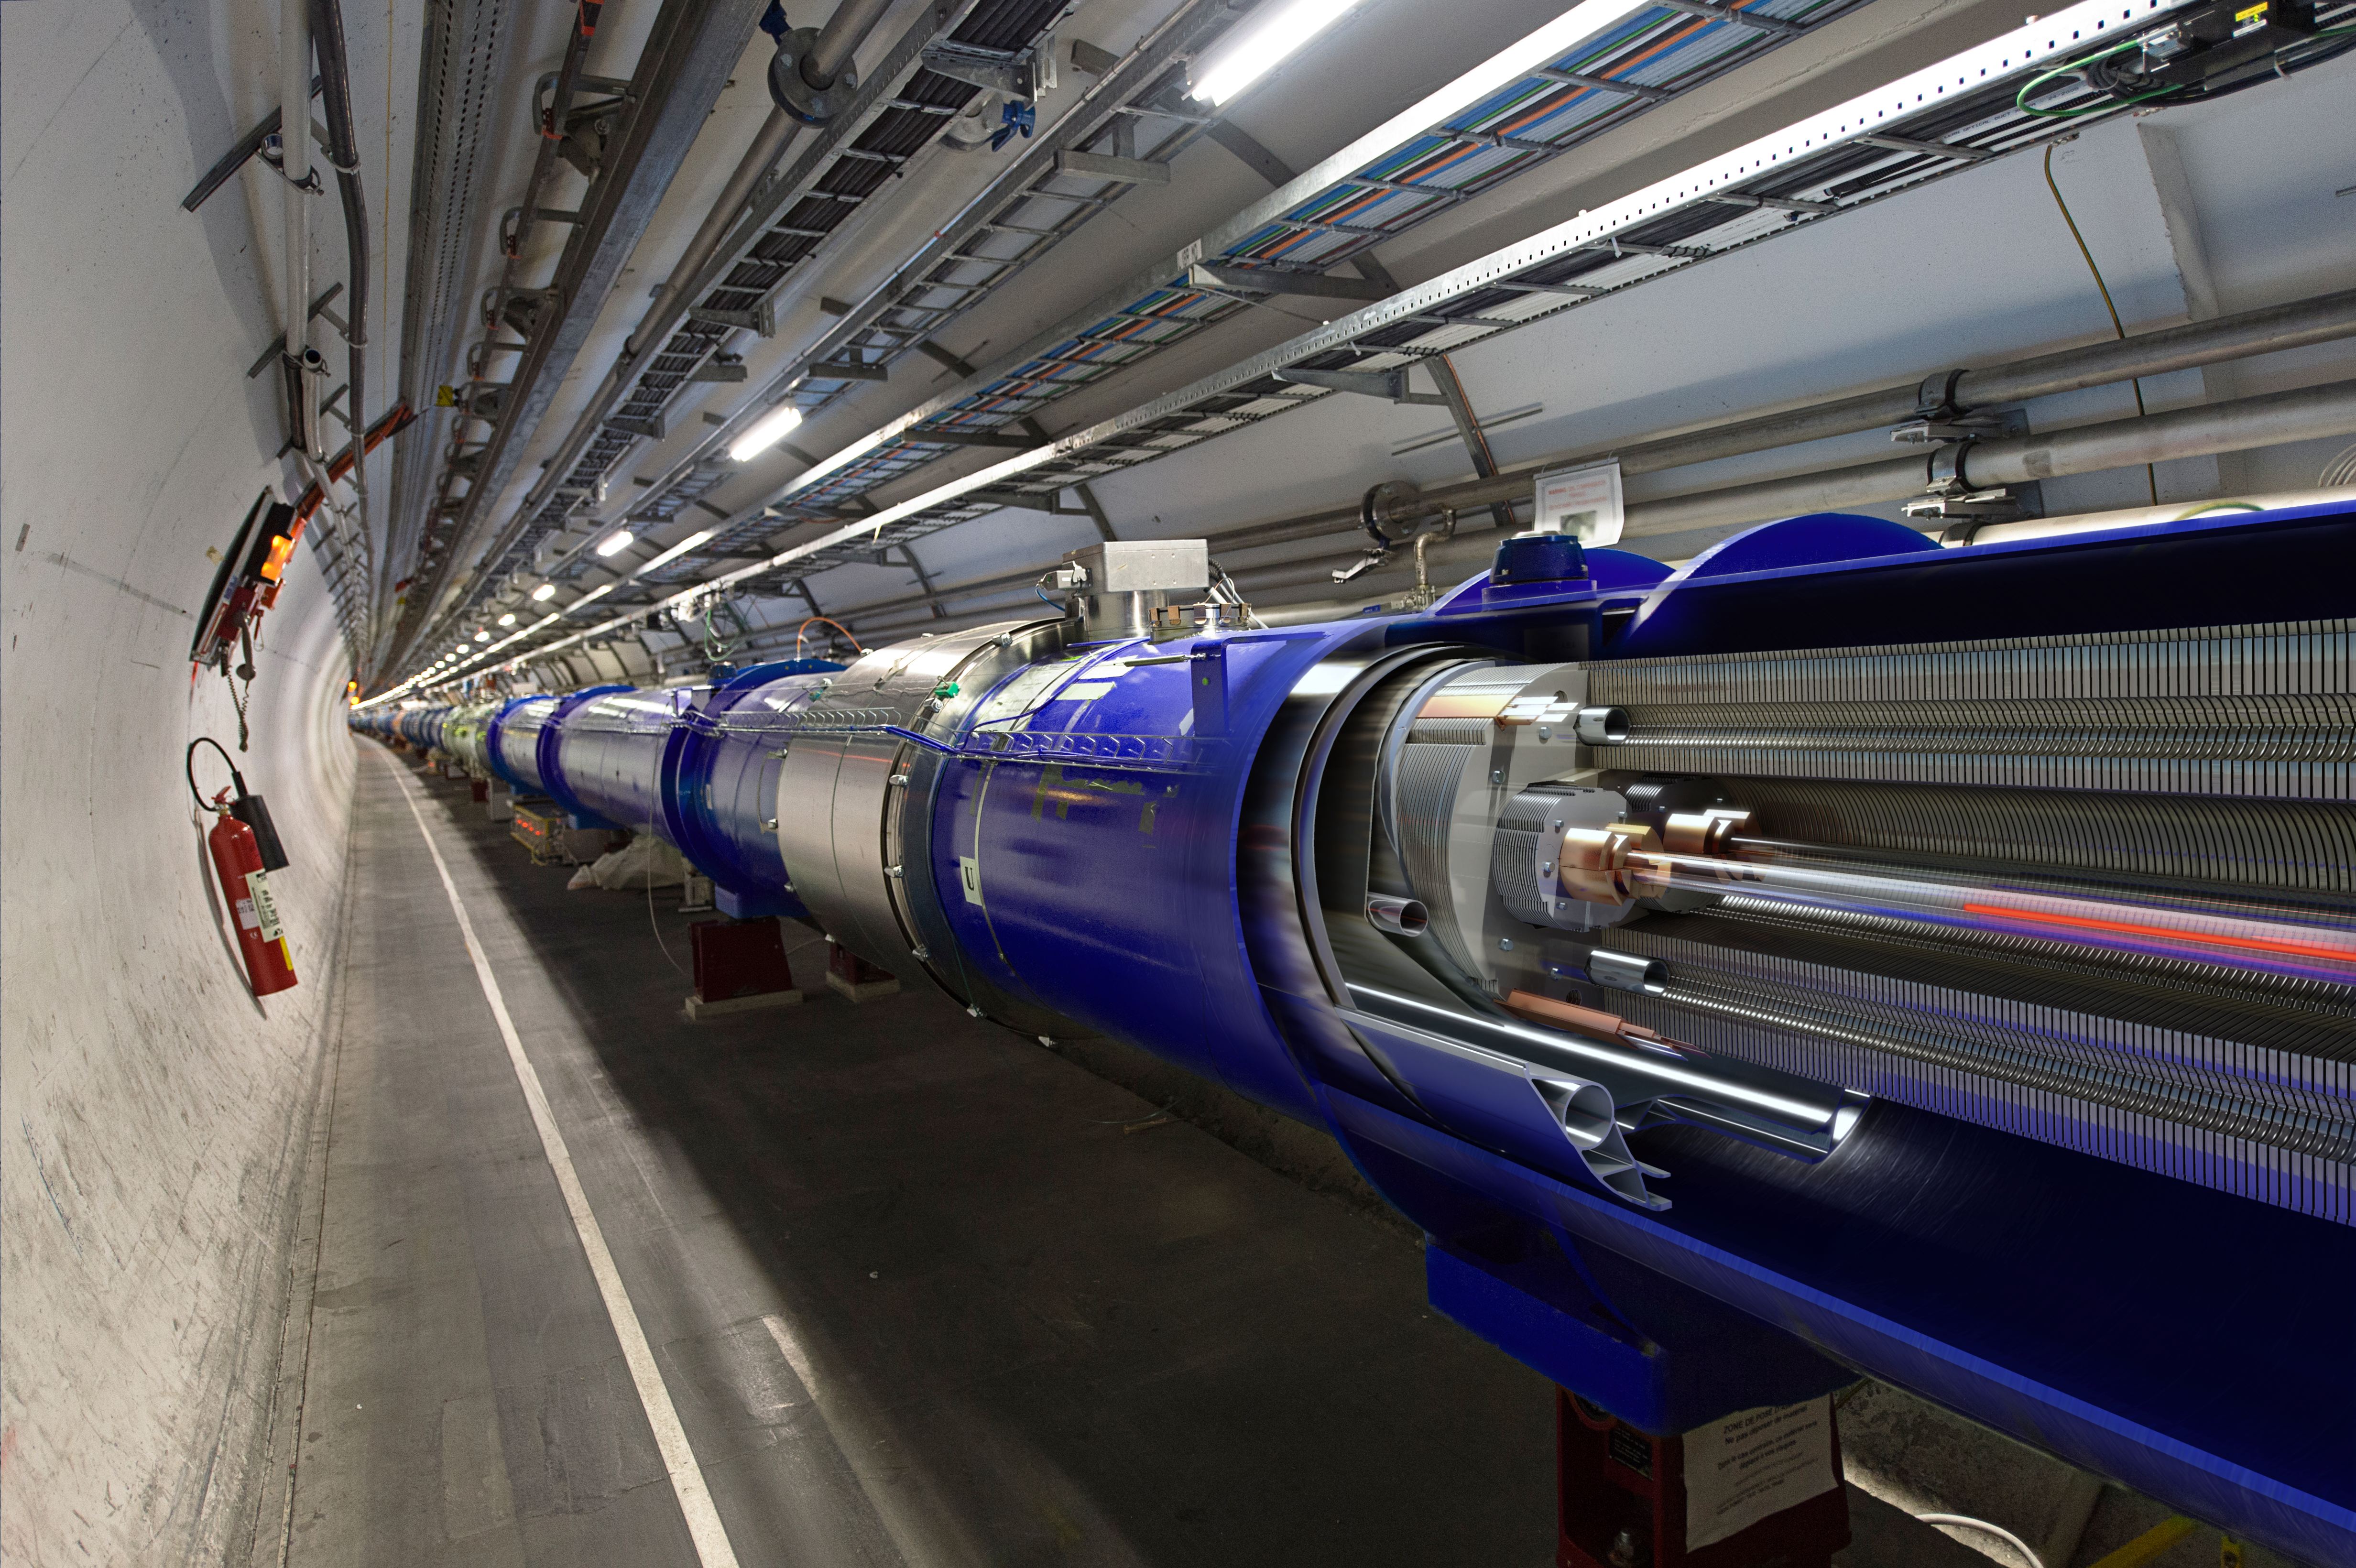 LHC image gallery